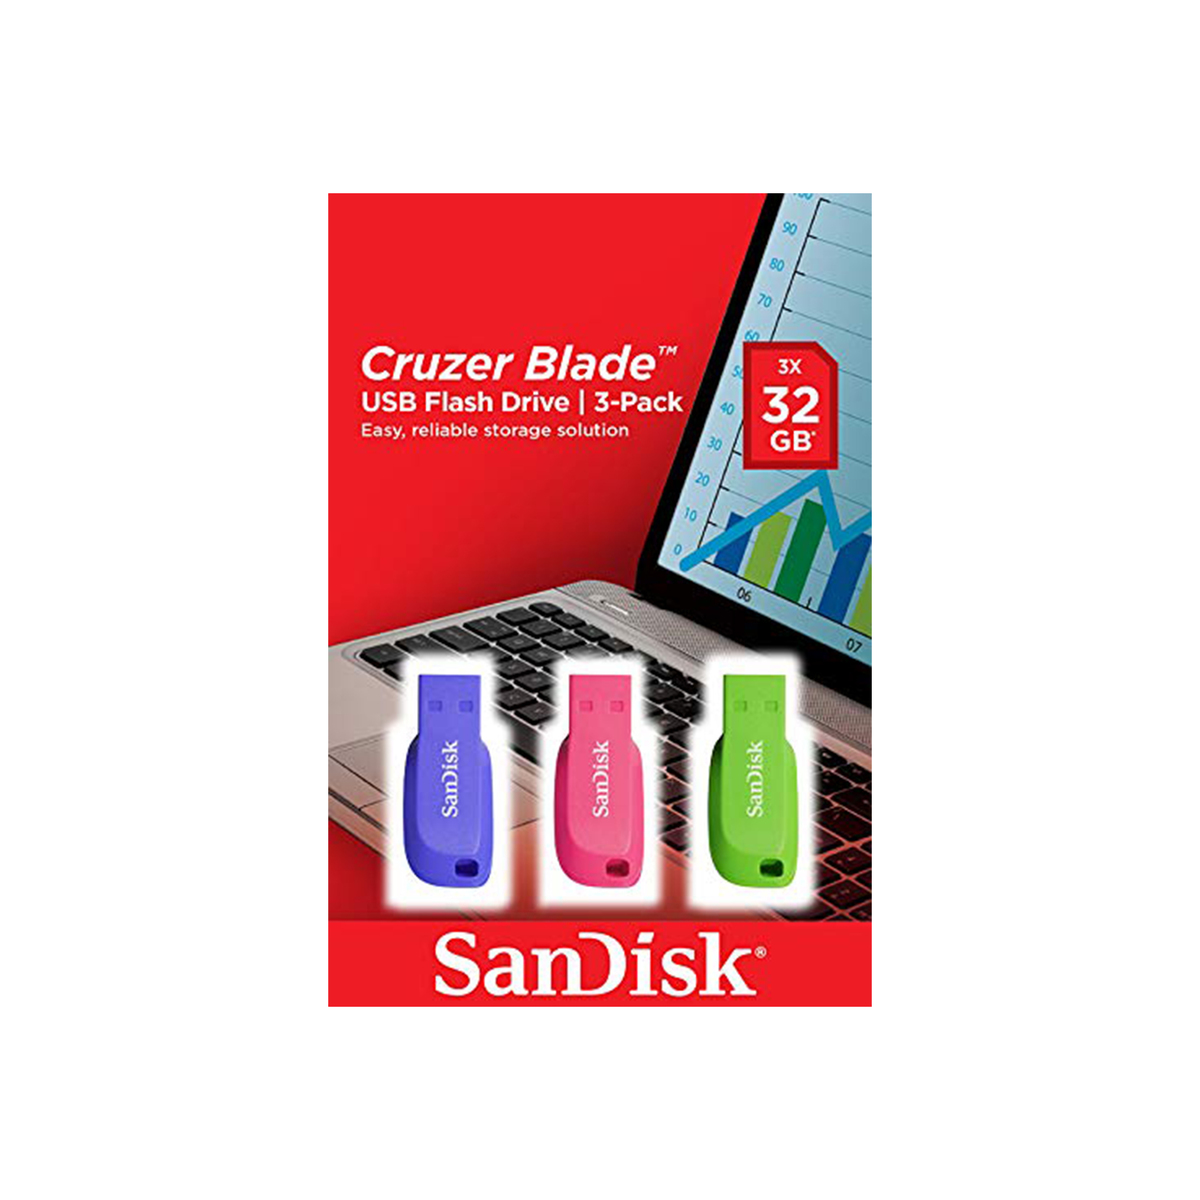 SanDisk Cruzer Blade USB Flash Drive SDCZ50C 32GB 3Pack